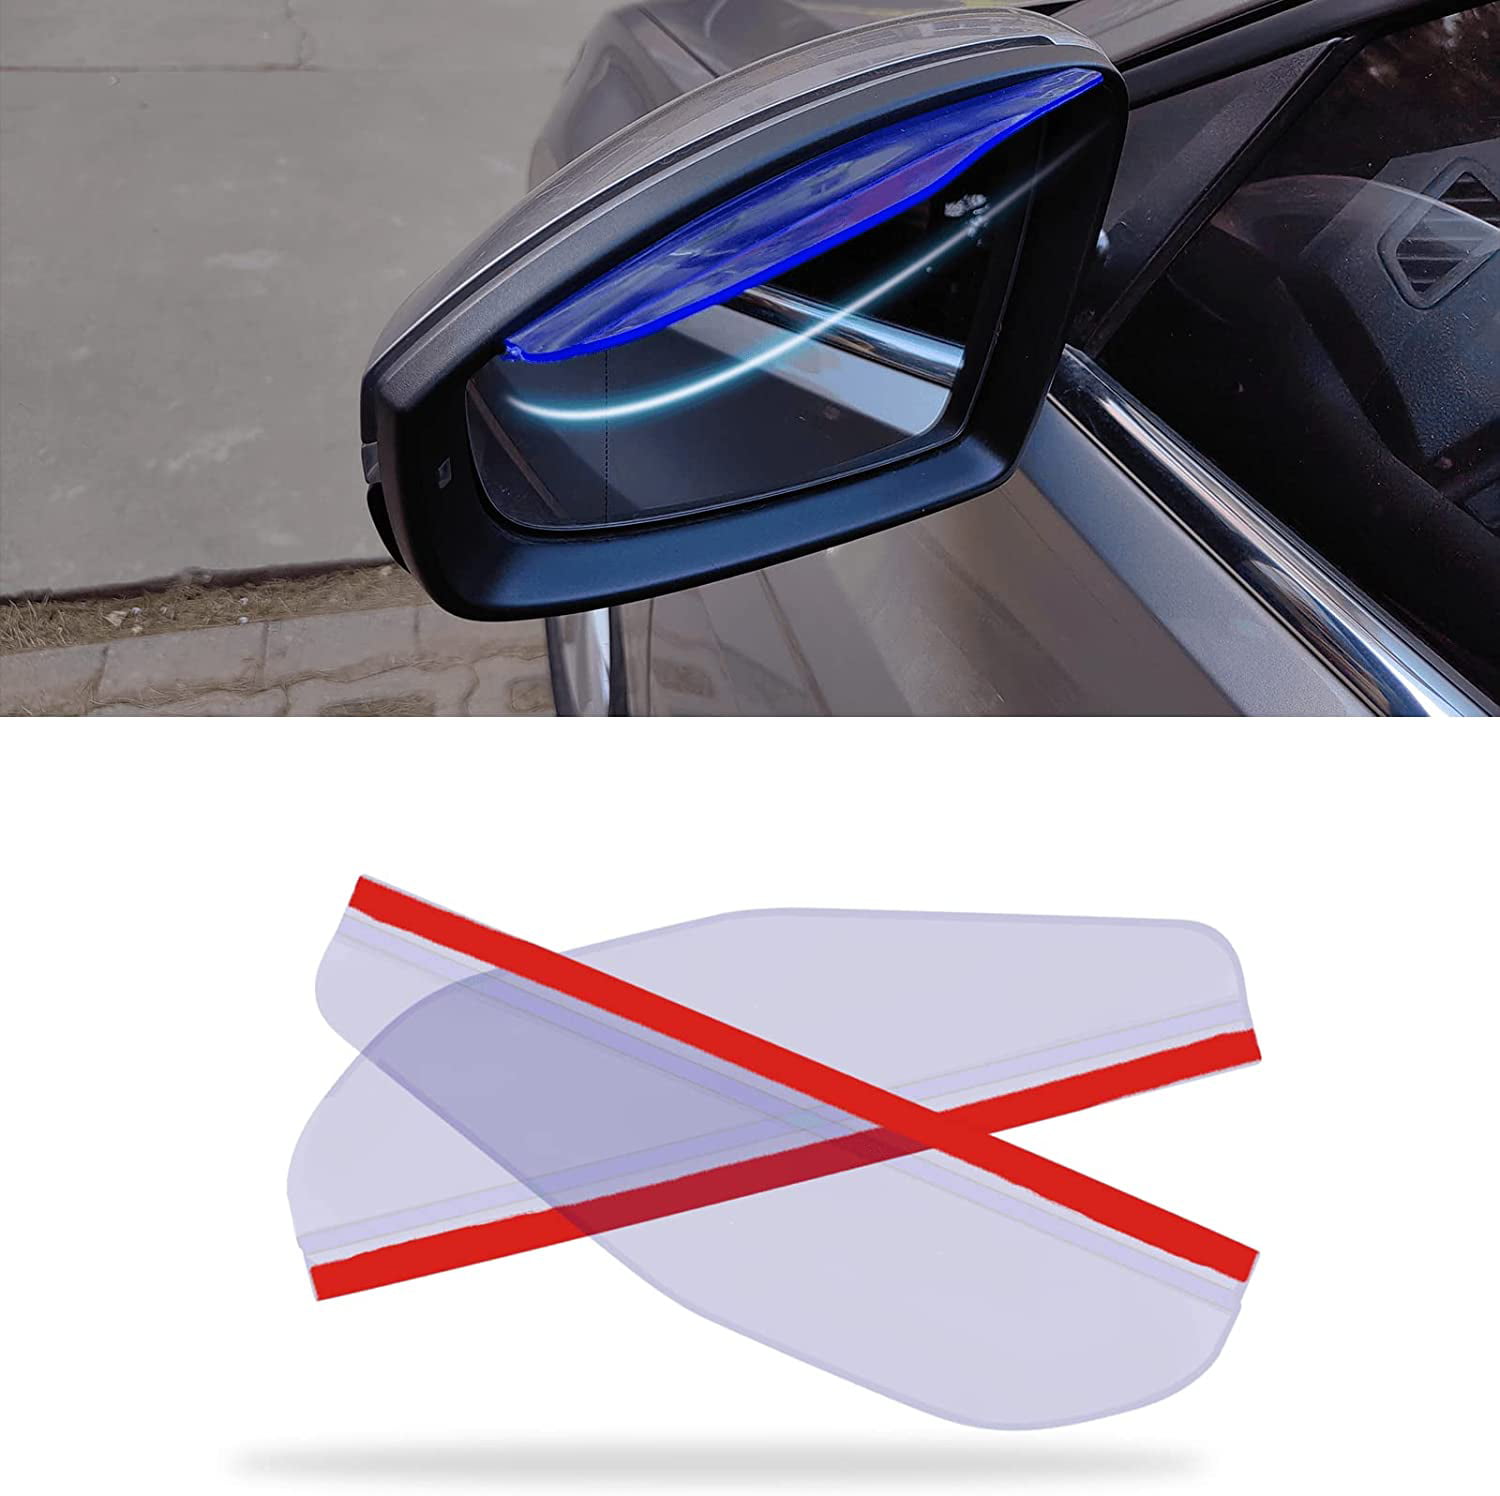 2Pcs Car Rear View Mirror Rain Visor Guard, Carbon Fiber Car Side